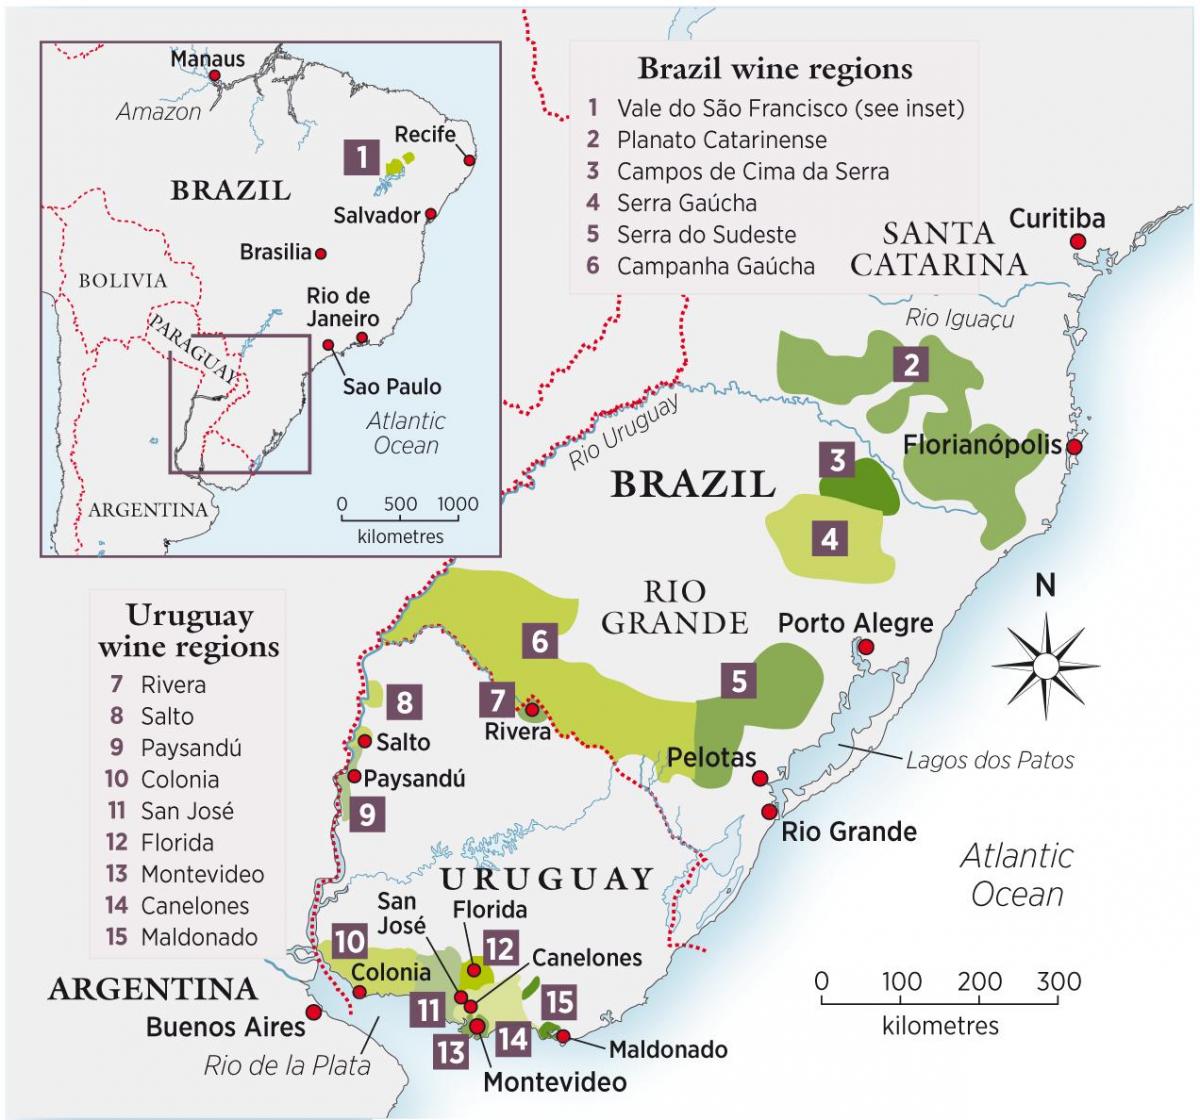 Kaart van Uruguay wyn